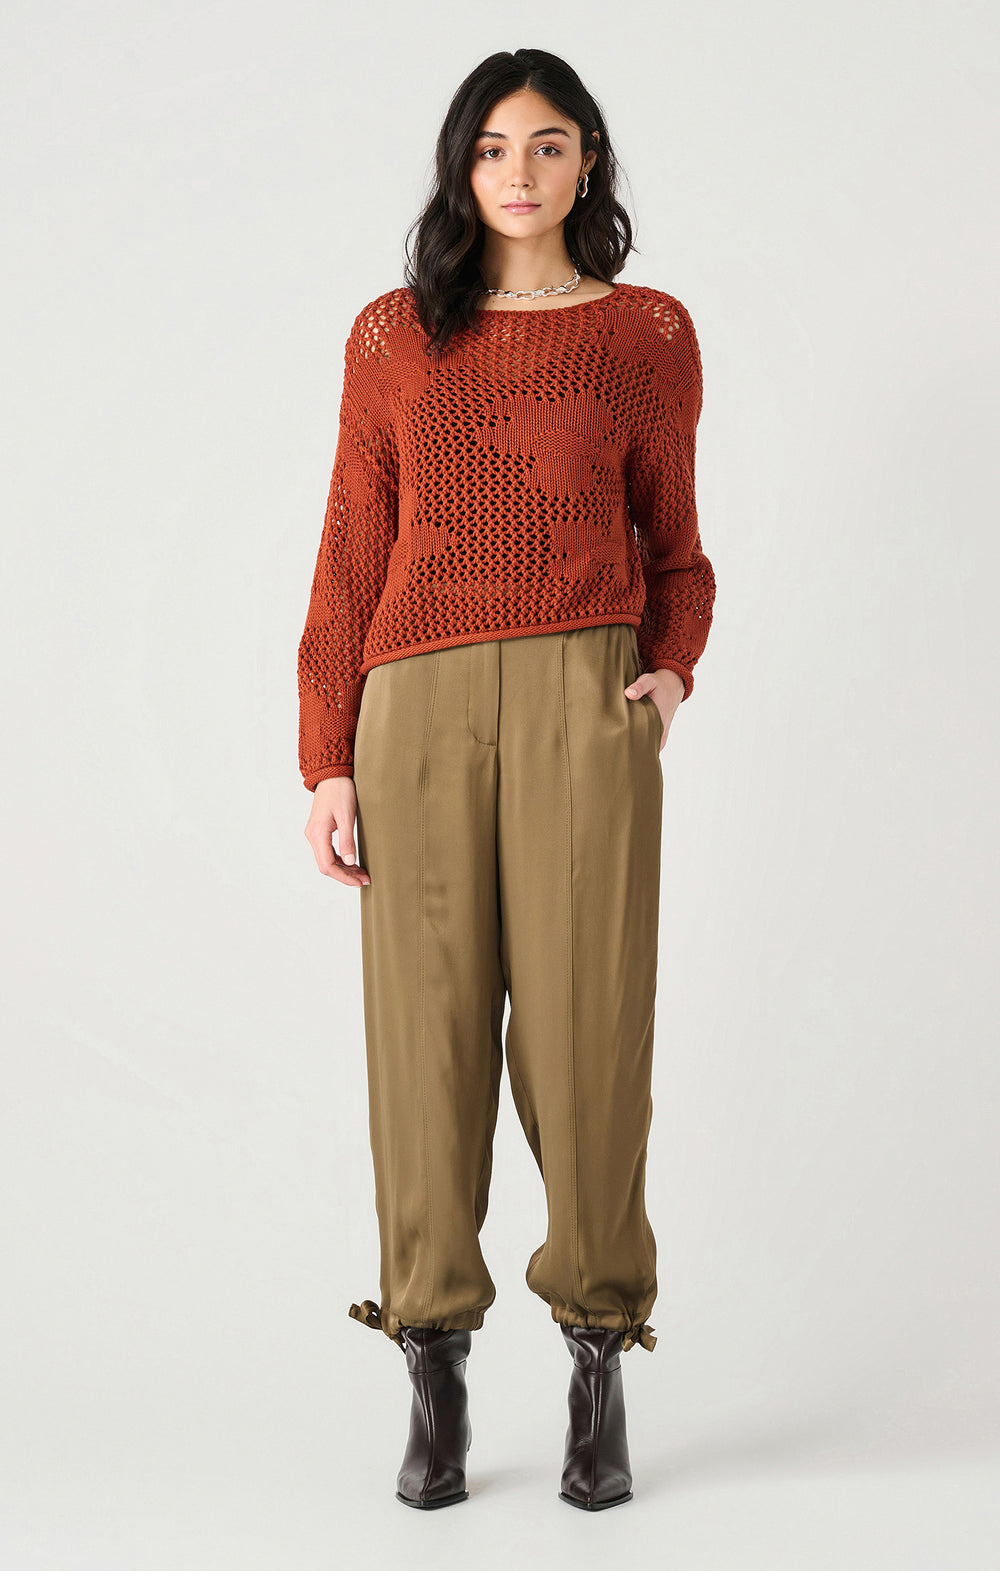 Mesh sweater with woven design in burnt orange - Tru Blue Boutique